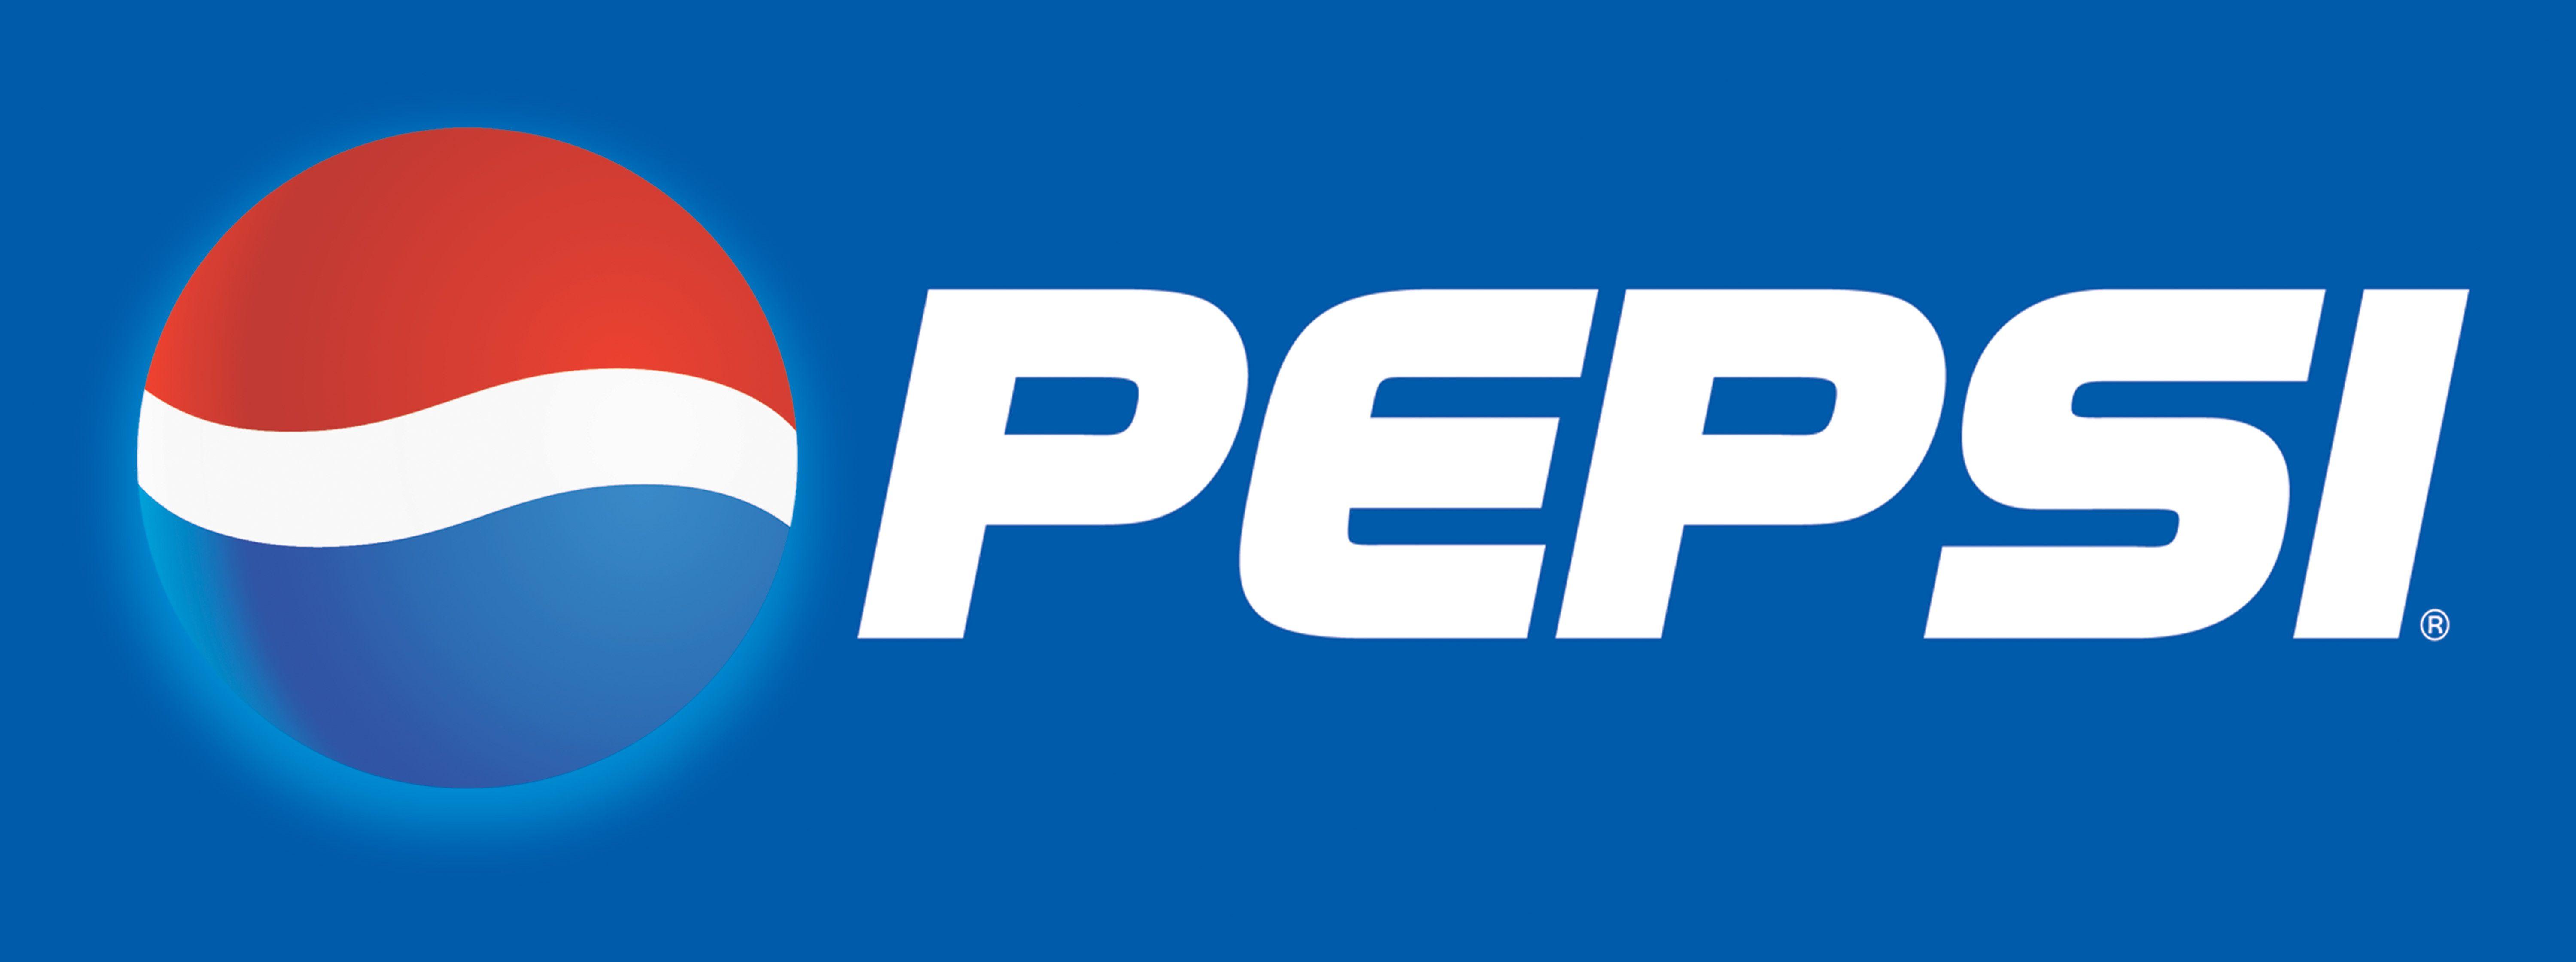 Image For > Pepsi Logo 2014 Png